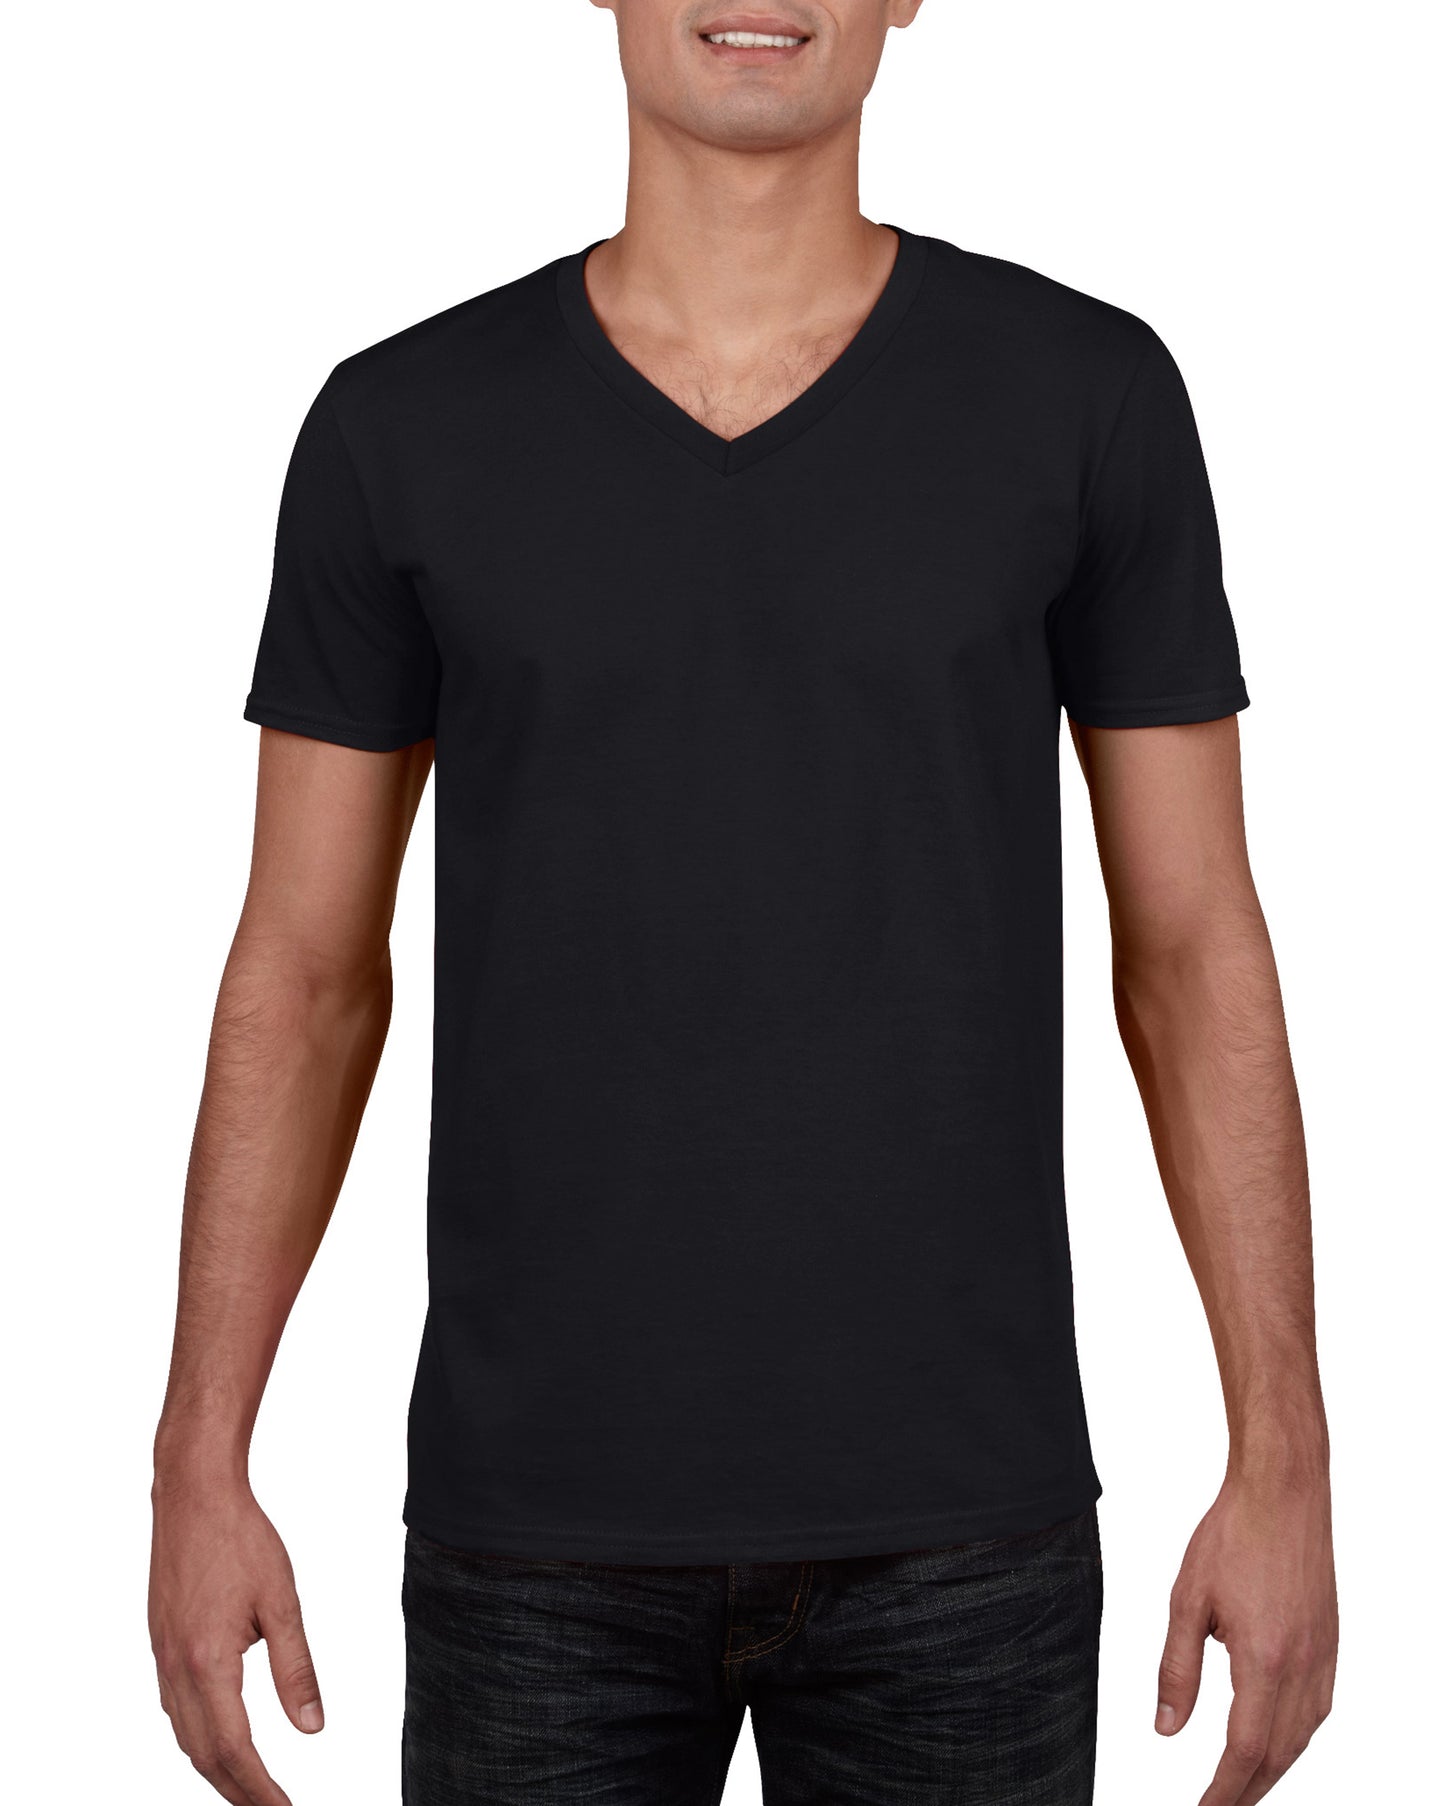 Men's Softstyle V-Neck S/S T-Shirt